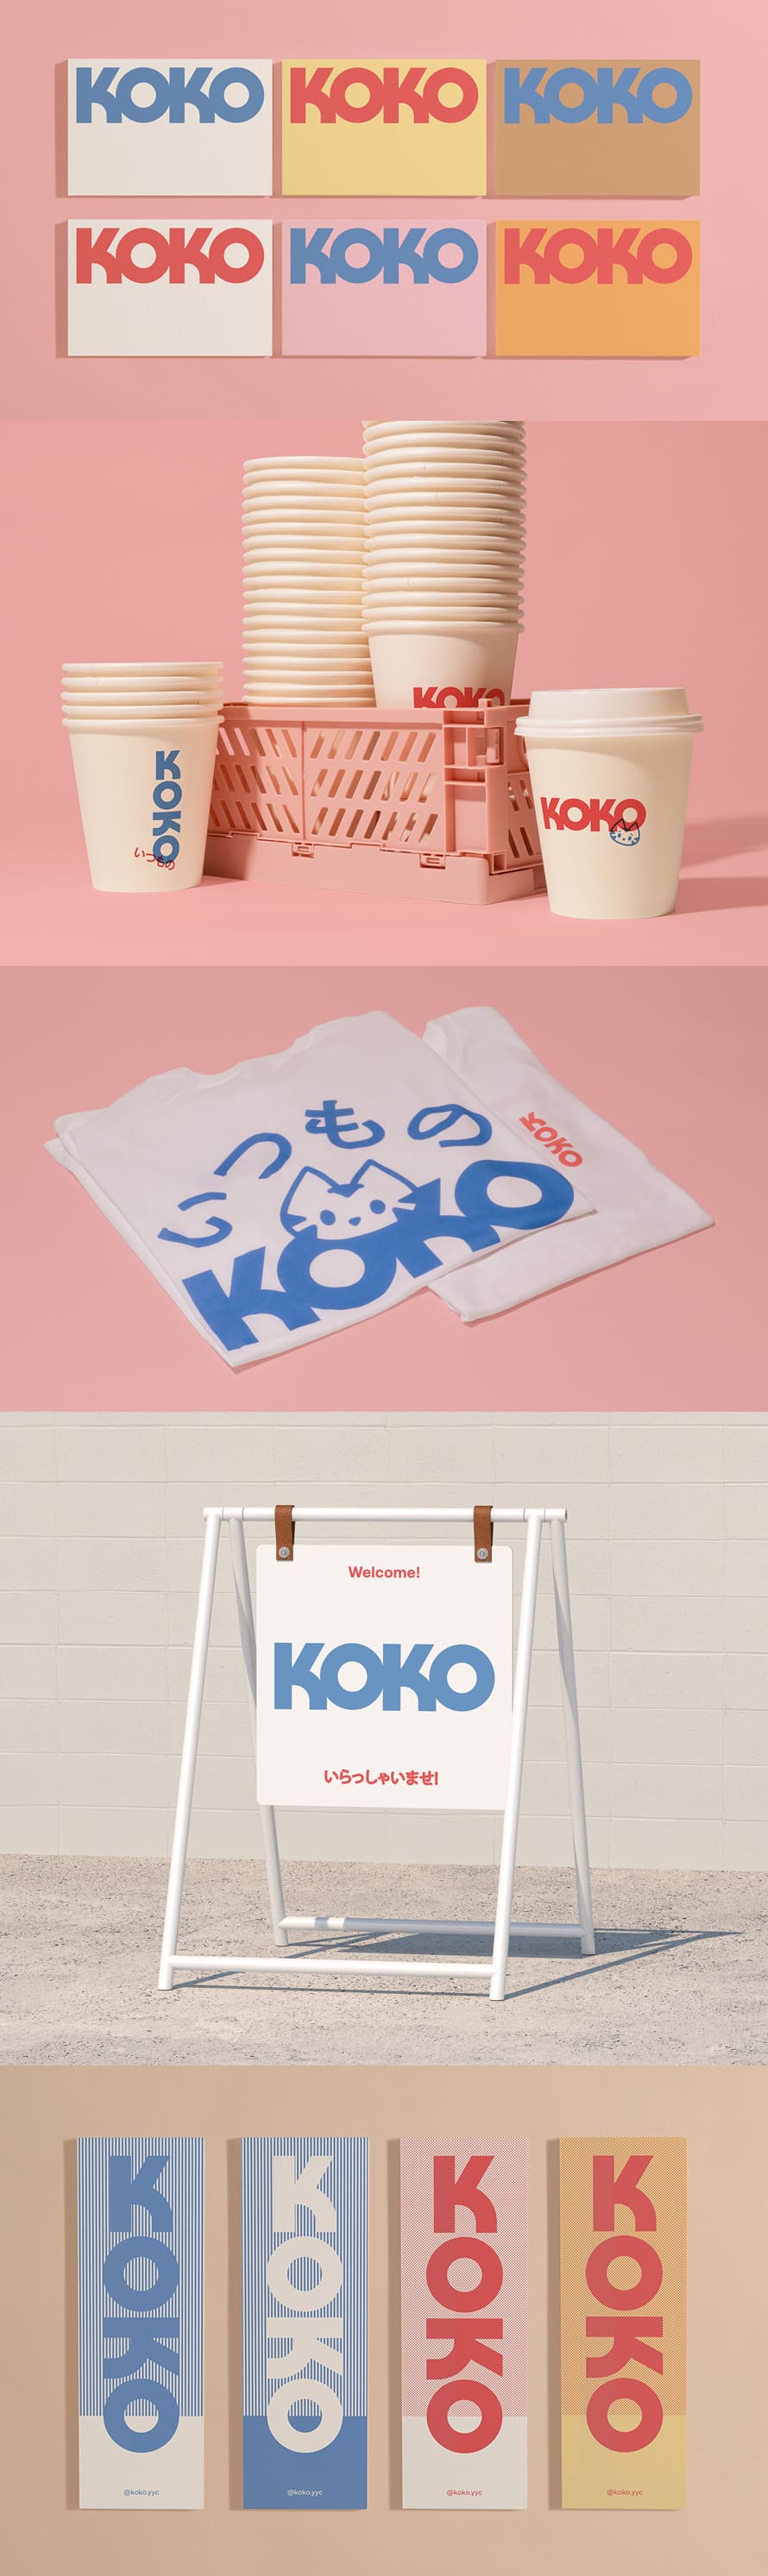 Koko Visual Identity